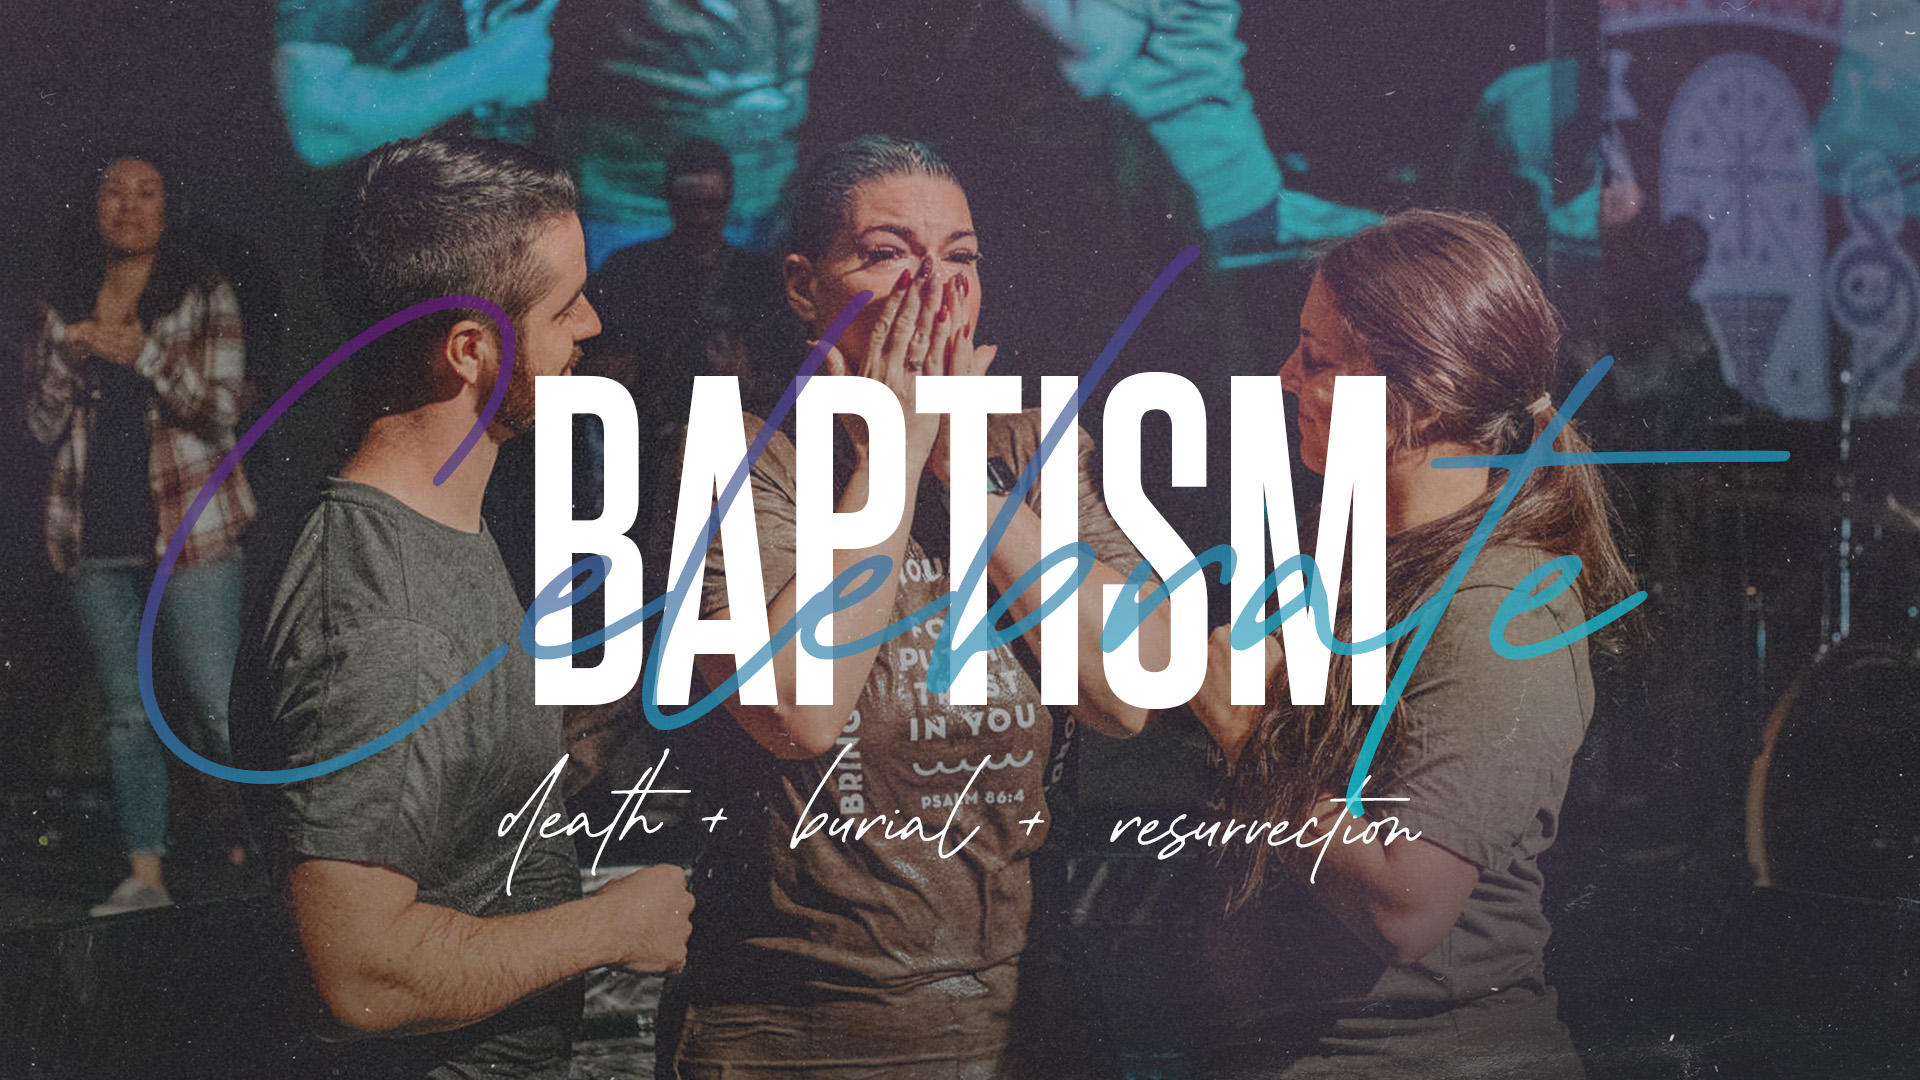 Celebrate Baptism!